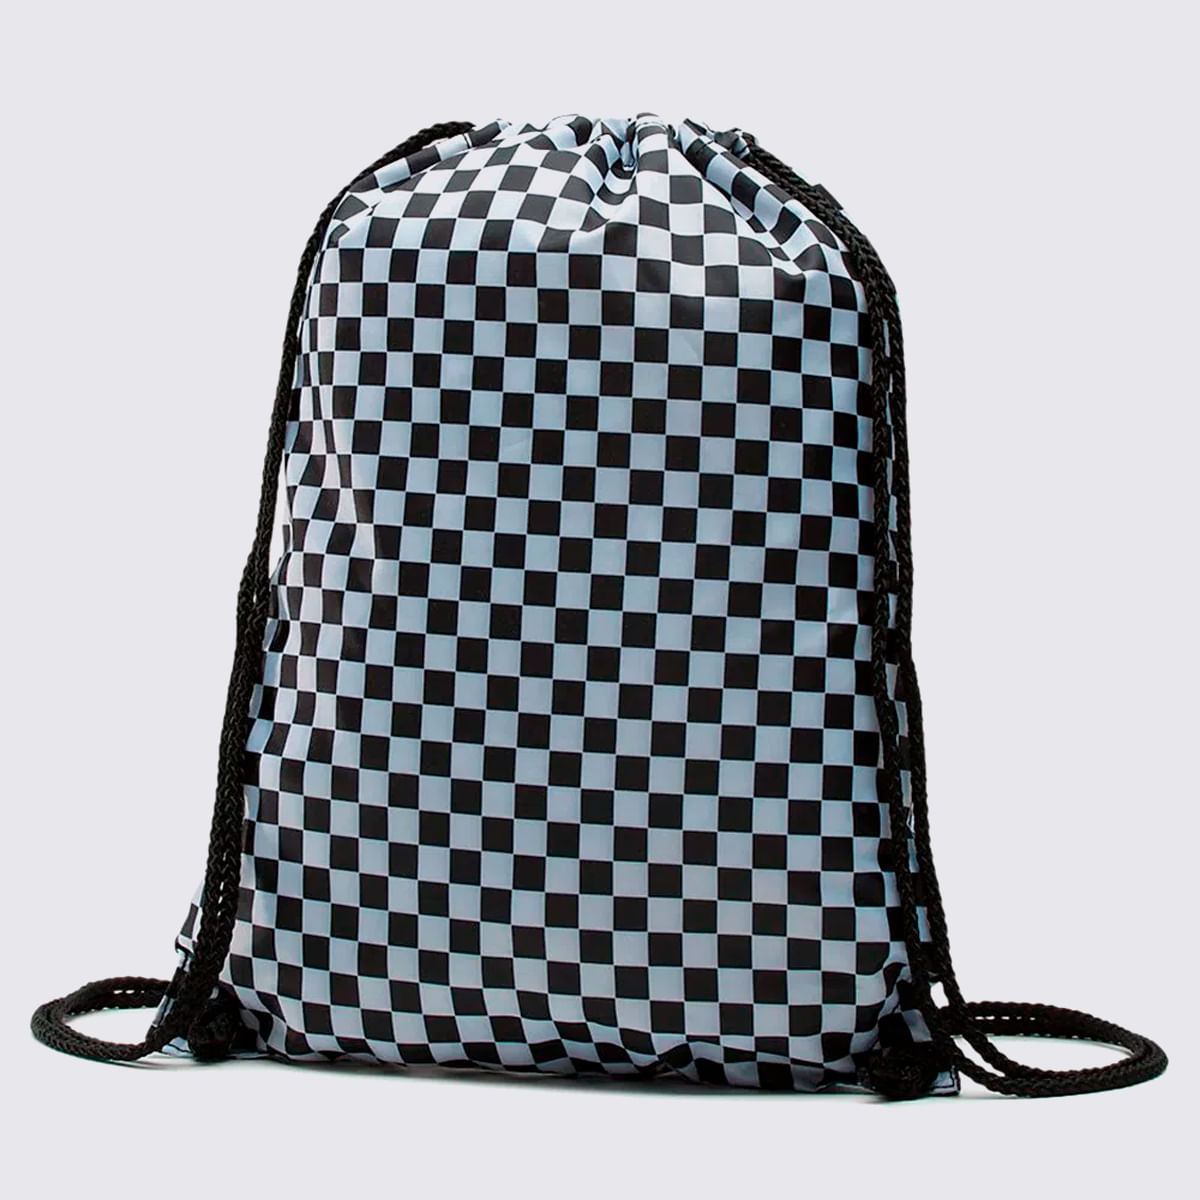 Mochila Vans Wm Benched Bag Black White Checkerboard VN000SUF56M - Menina  Shoes | Rucksäcke